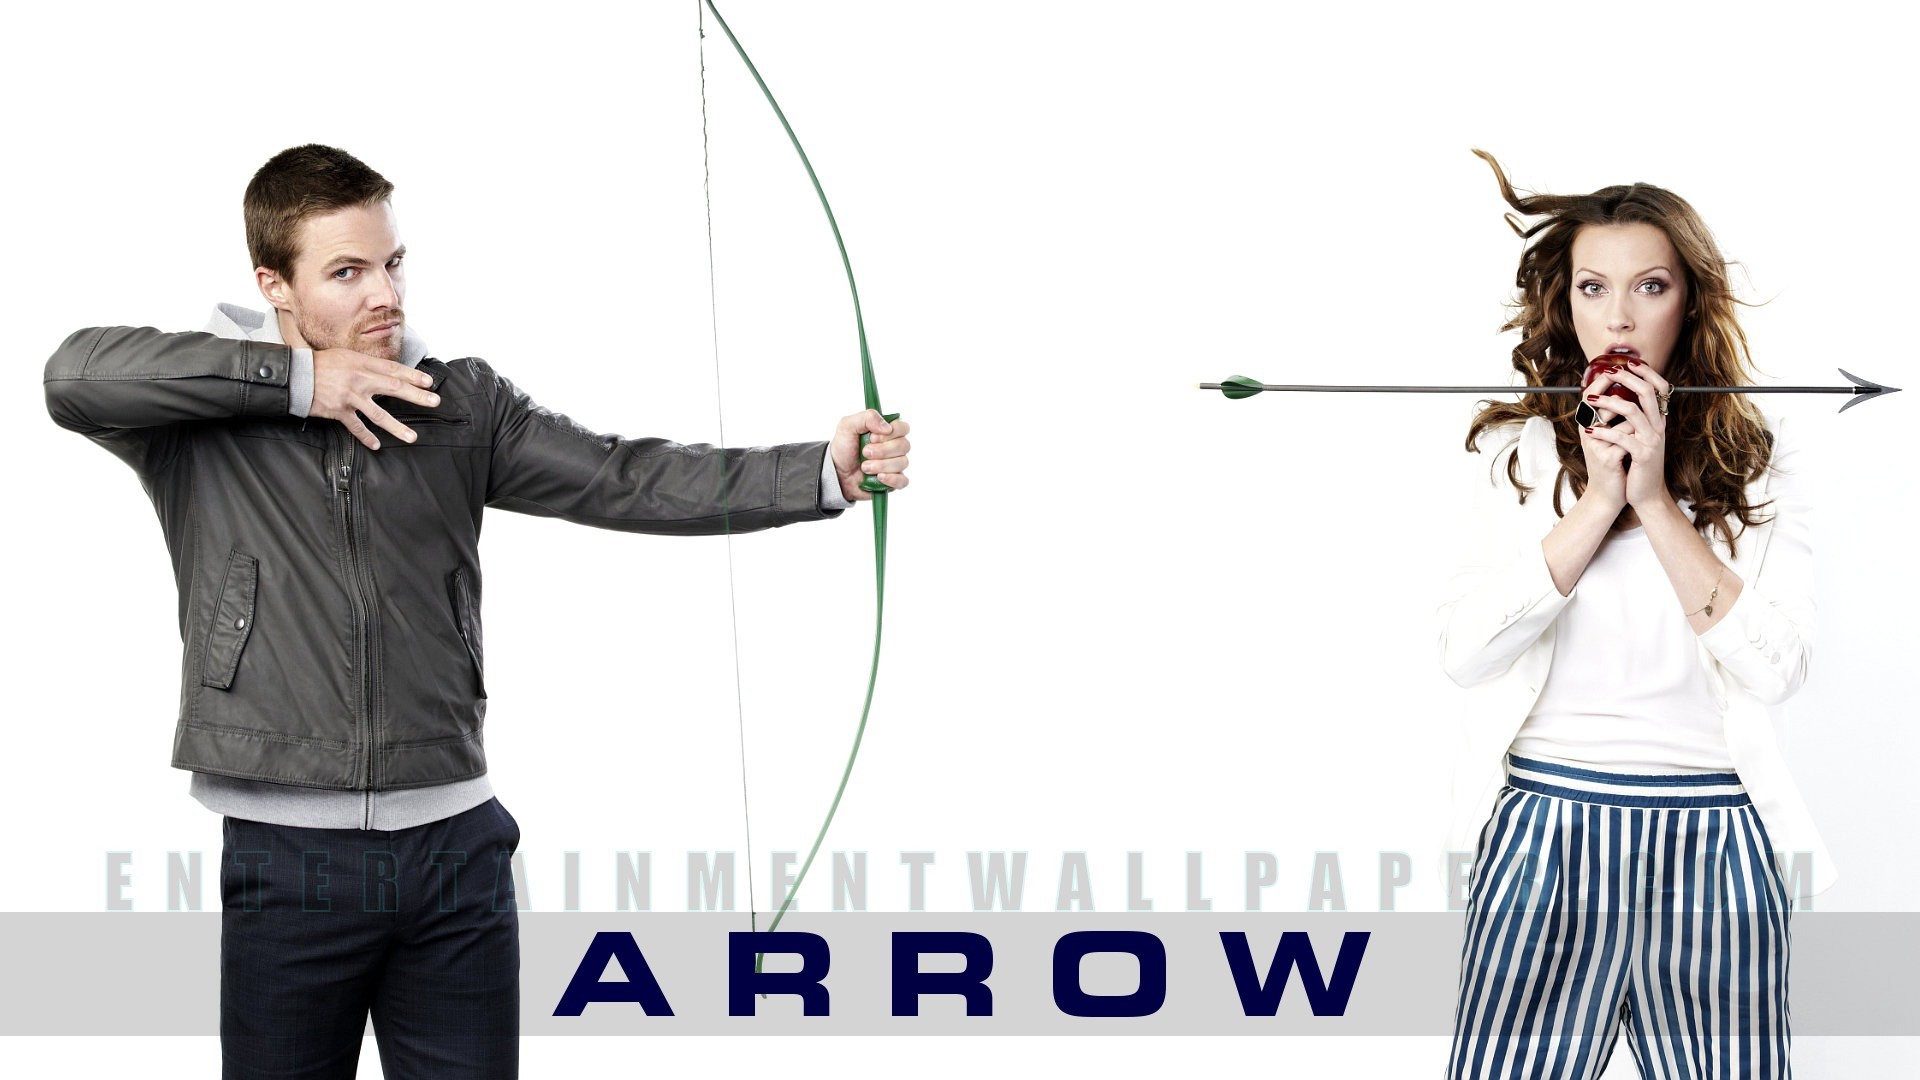 1920x1080 Arrow Wallpaper - Original size, download now.